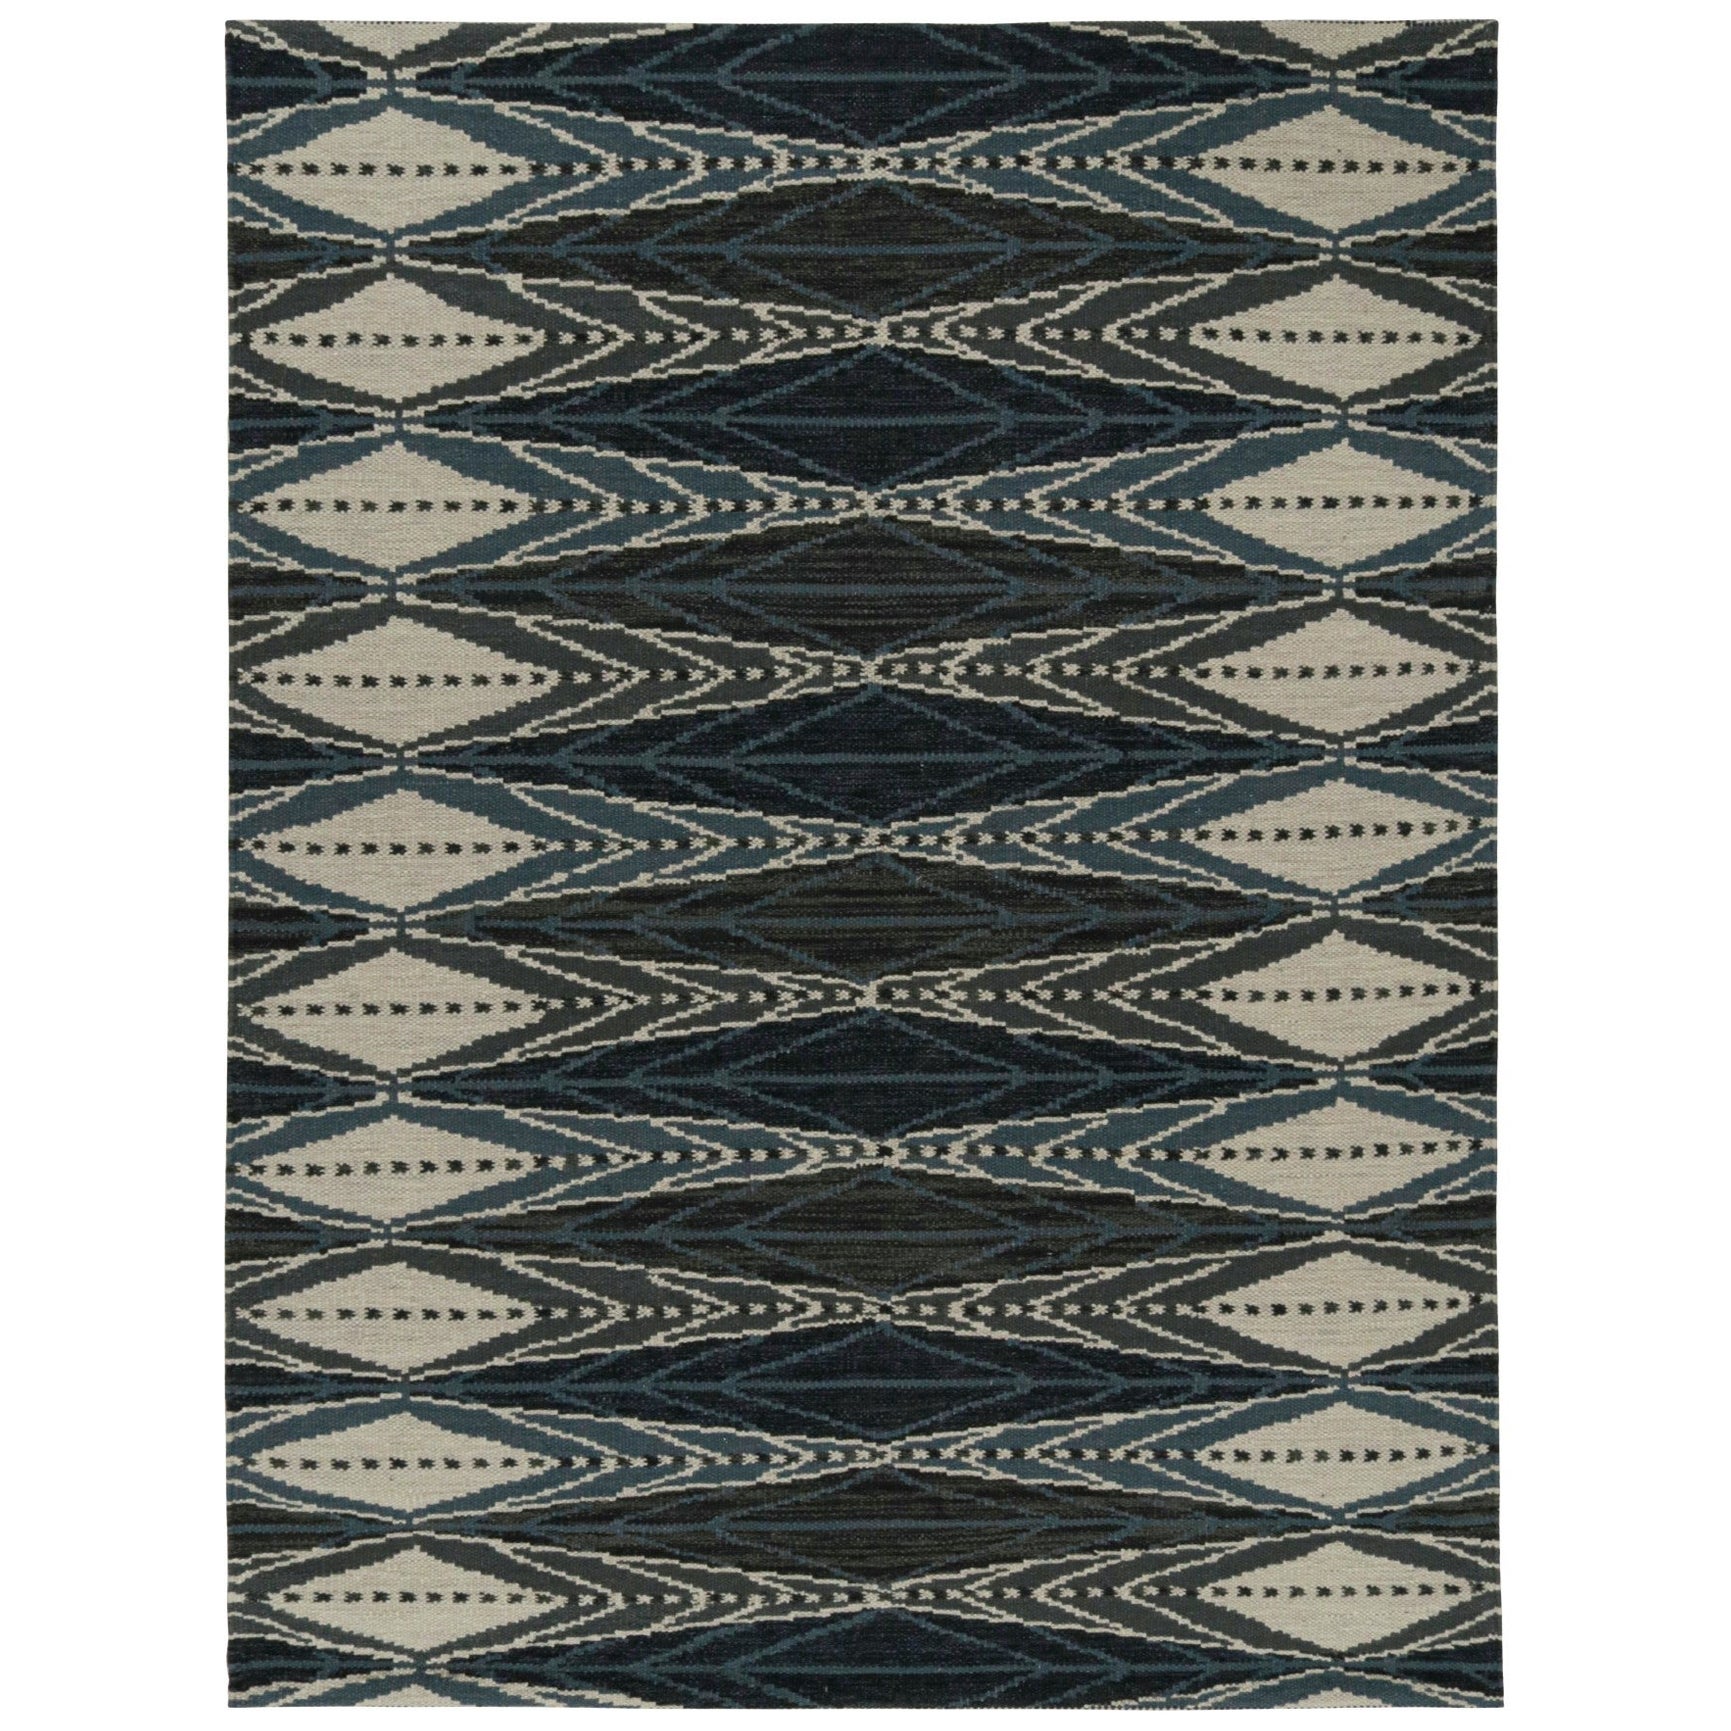 Rug & Kilim’s Scandinavian Style Kilim in Blue & Grey Geometric Patterns